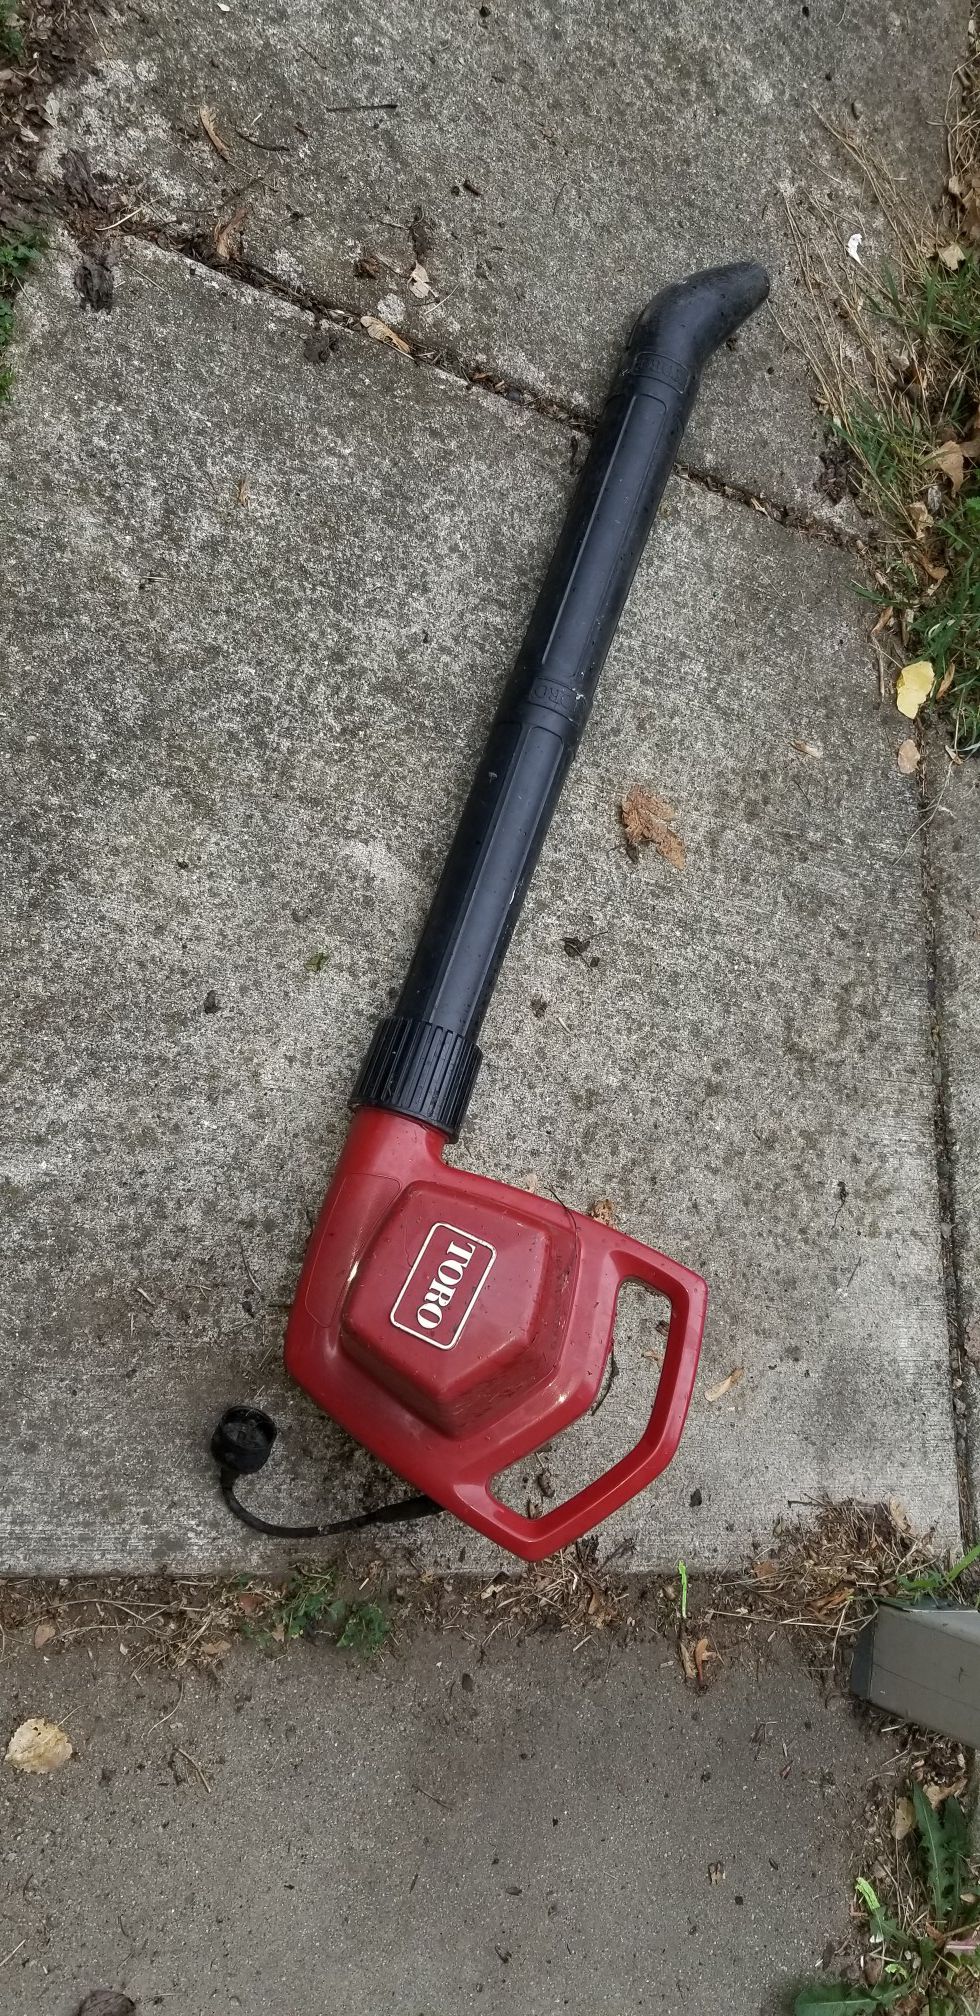 Outdoor leaf blower